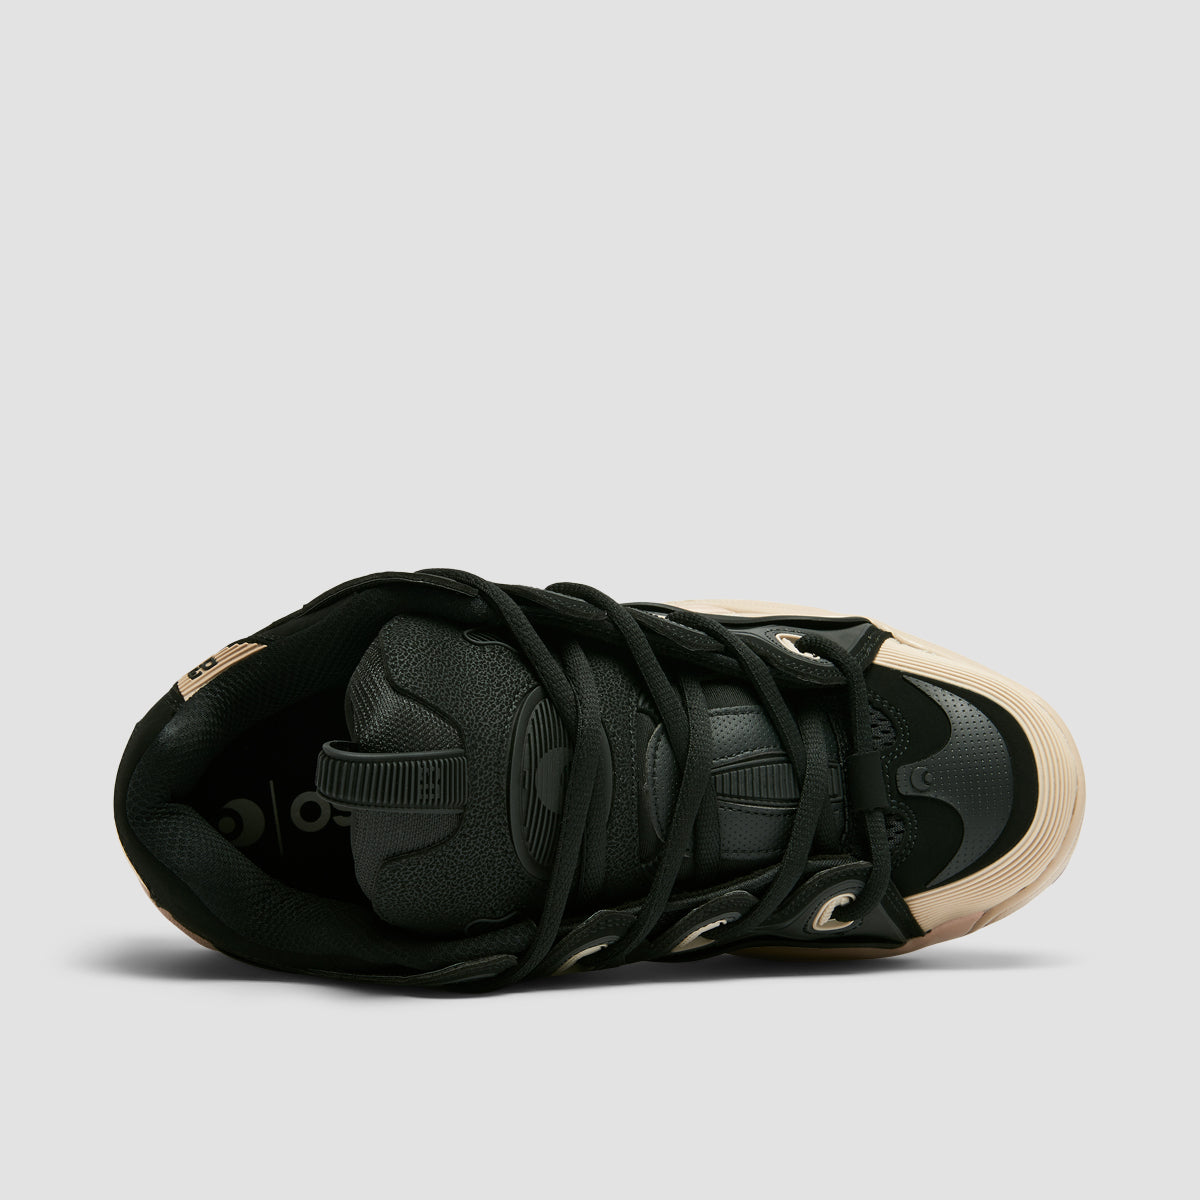 Osiris D3 2001 Shoes - Black/Black/Tan